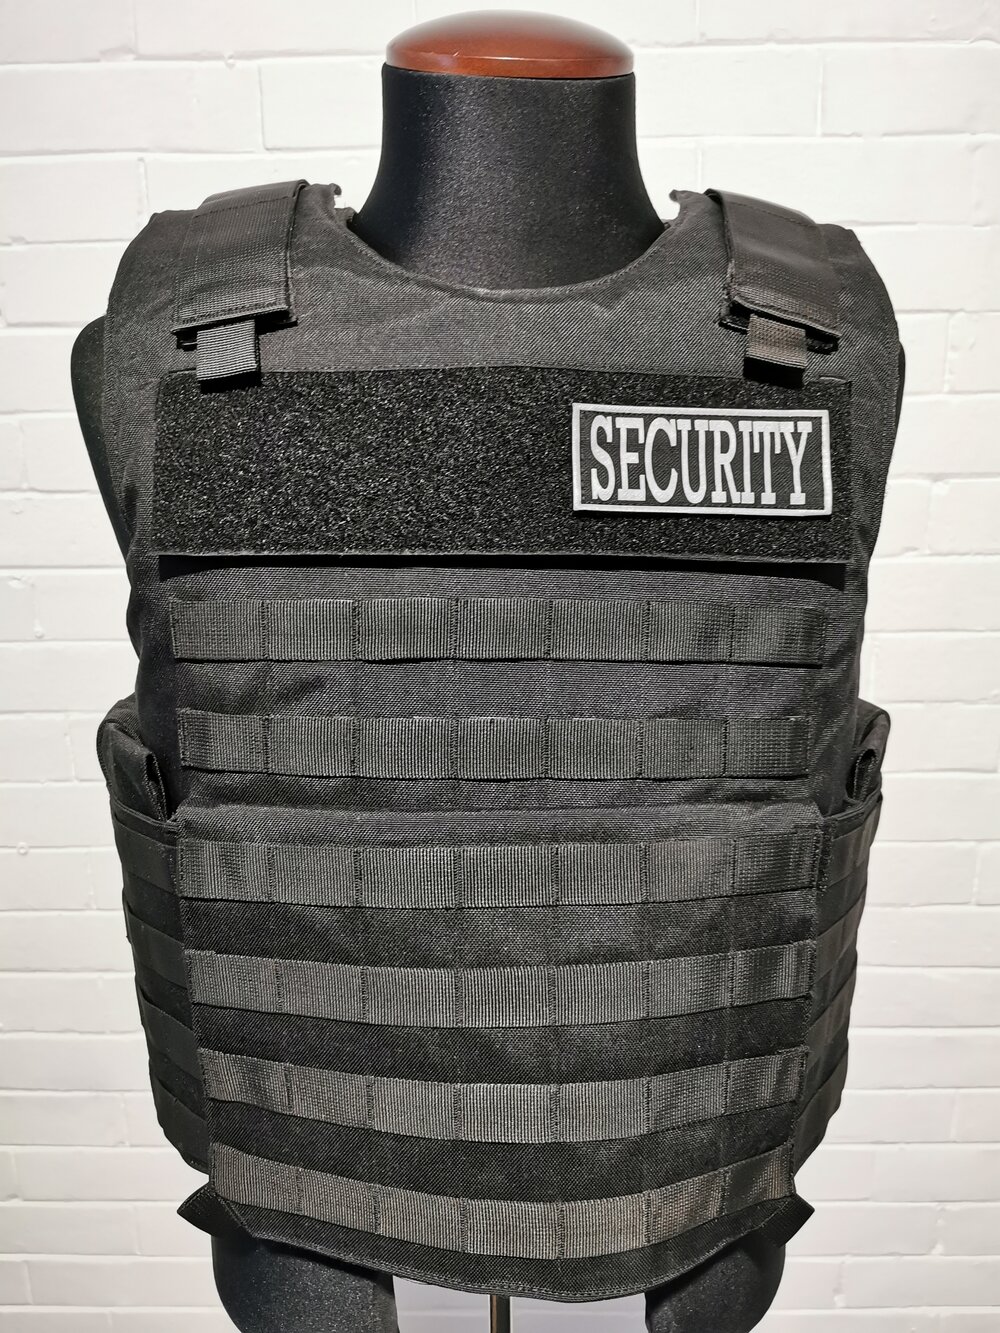 stab proof vest security